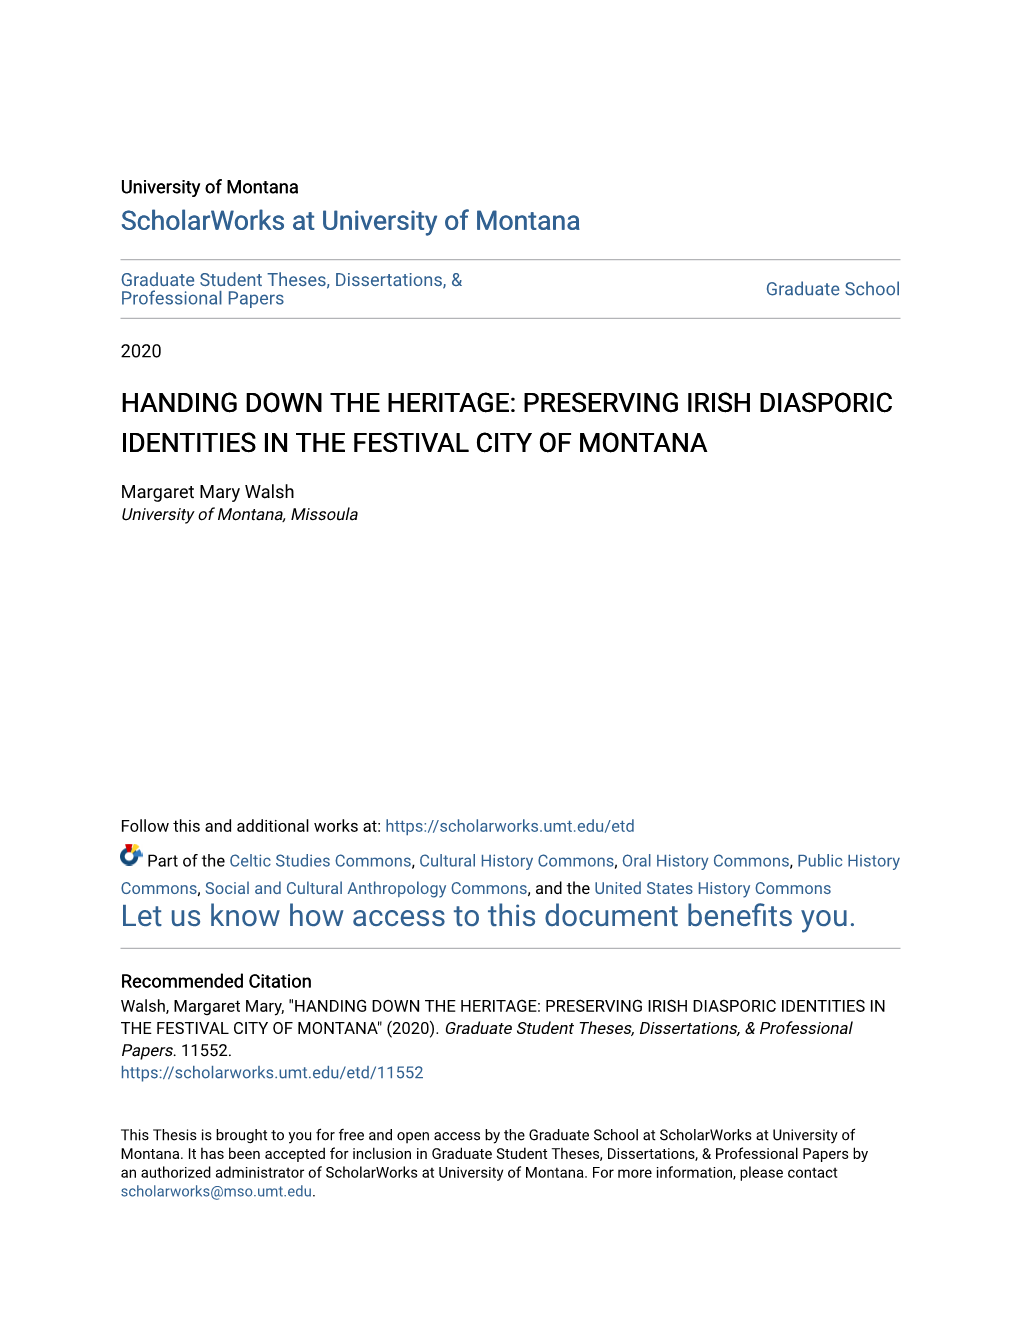 Handing Down the Heritage: Preserving Irish Diasporic Identities in the Festival City of Montana